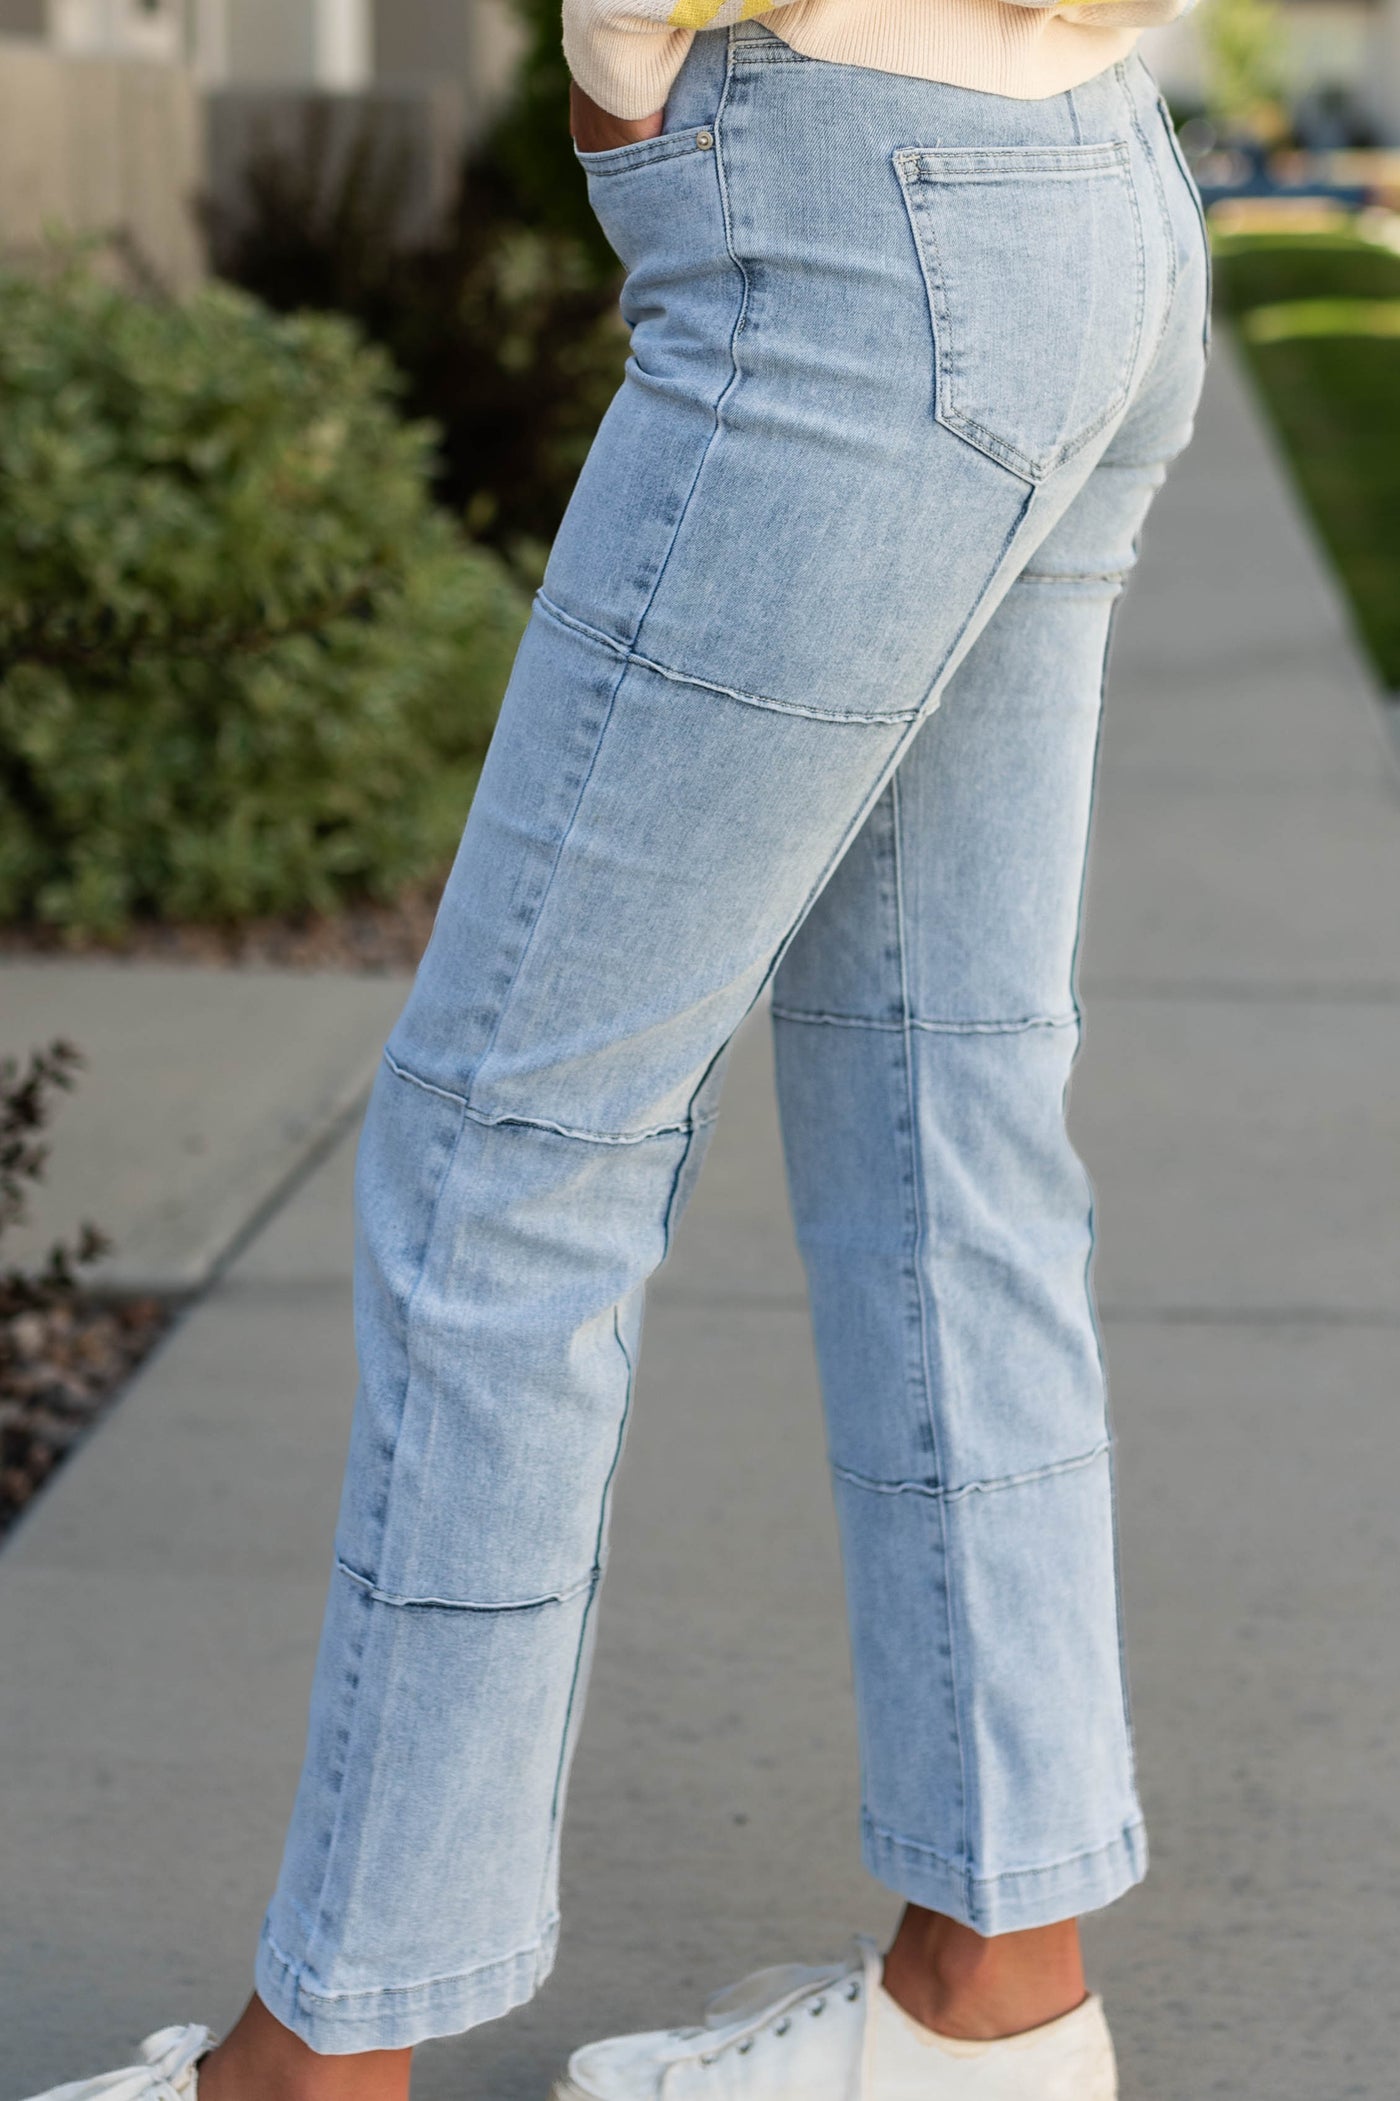 Side view of light denim jeans